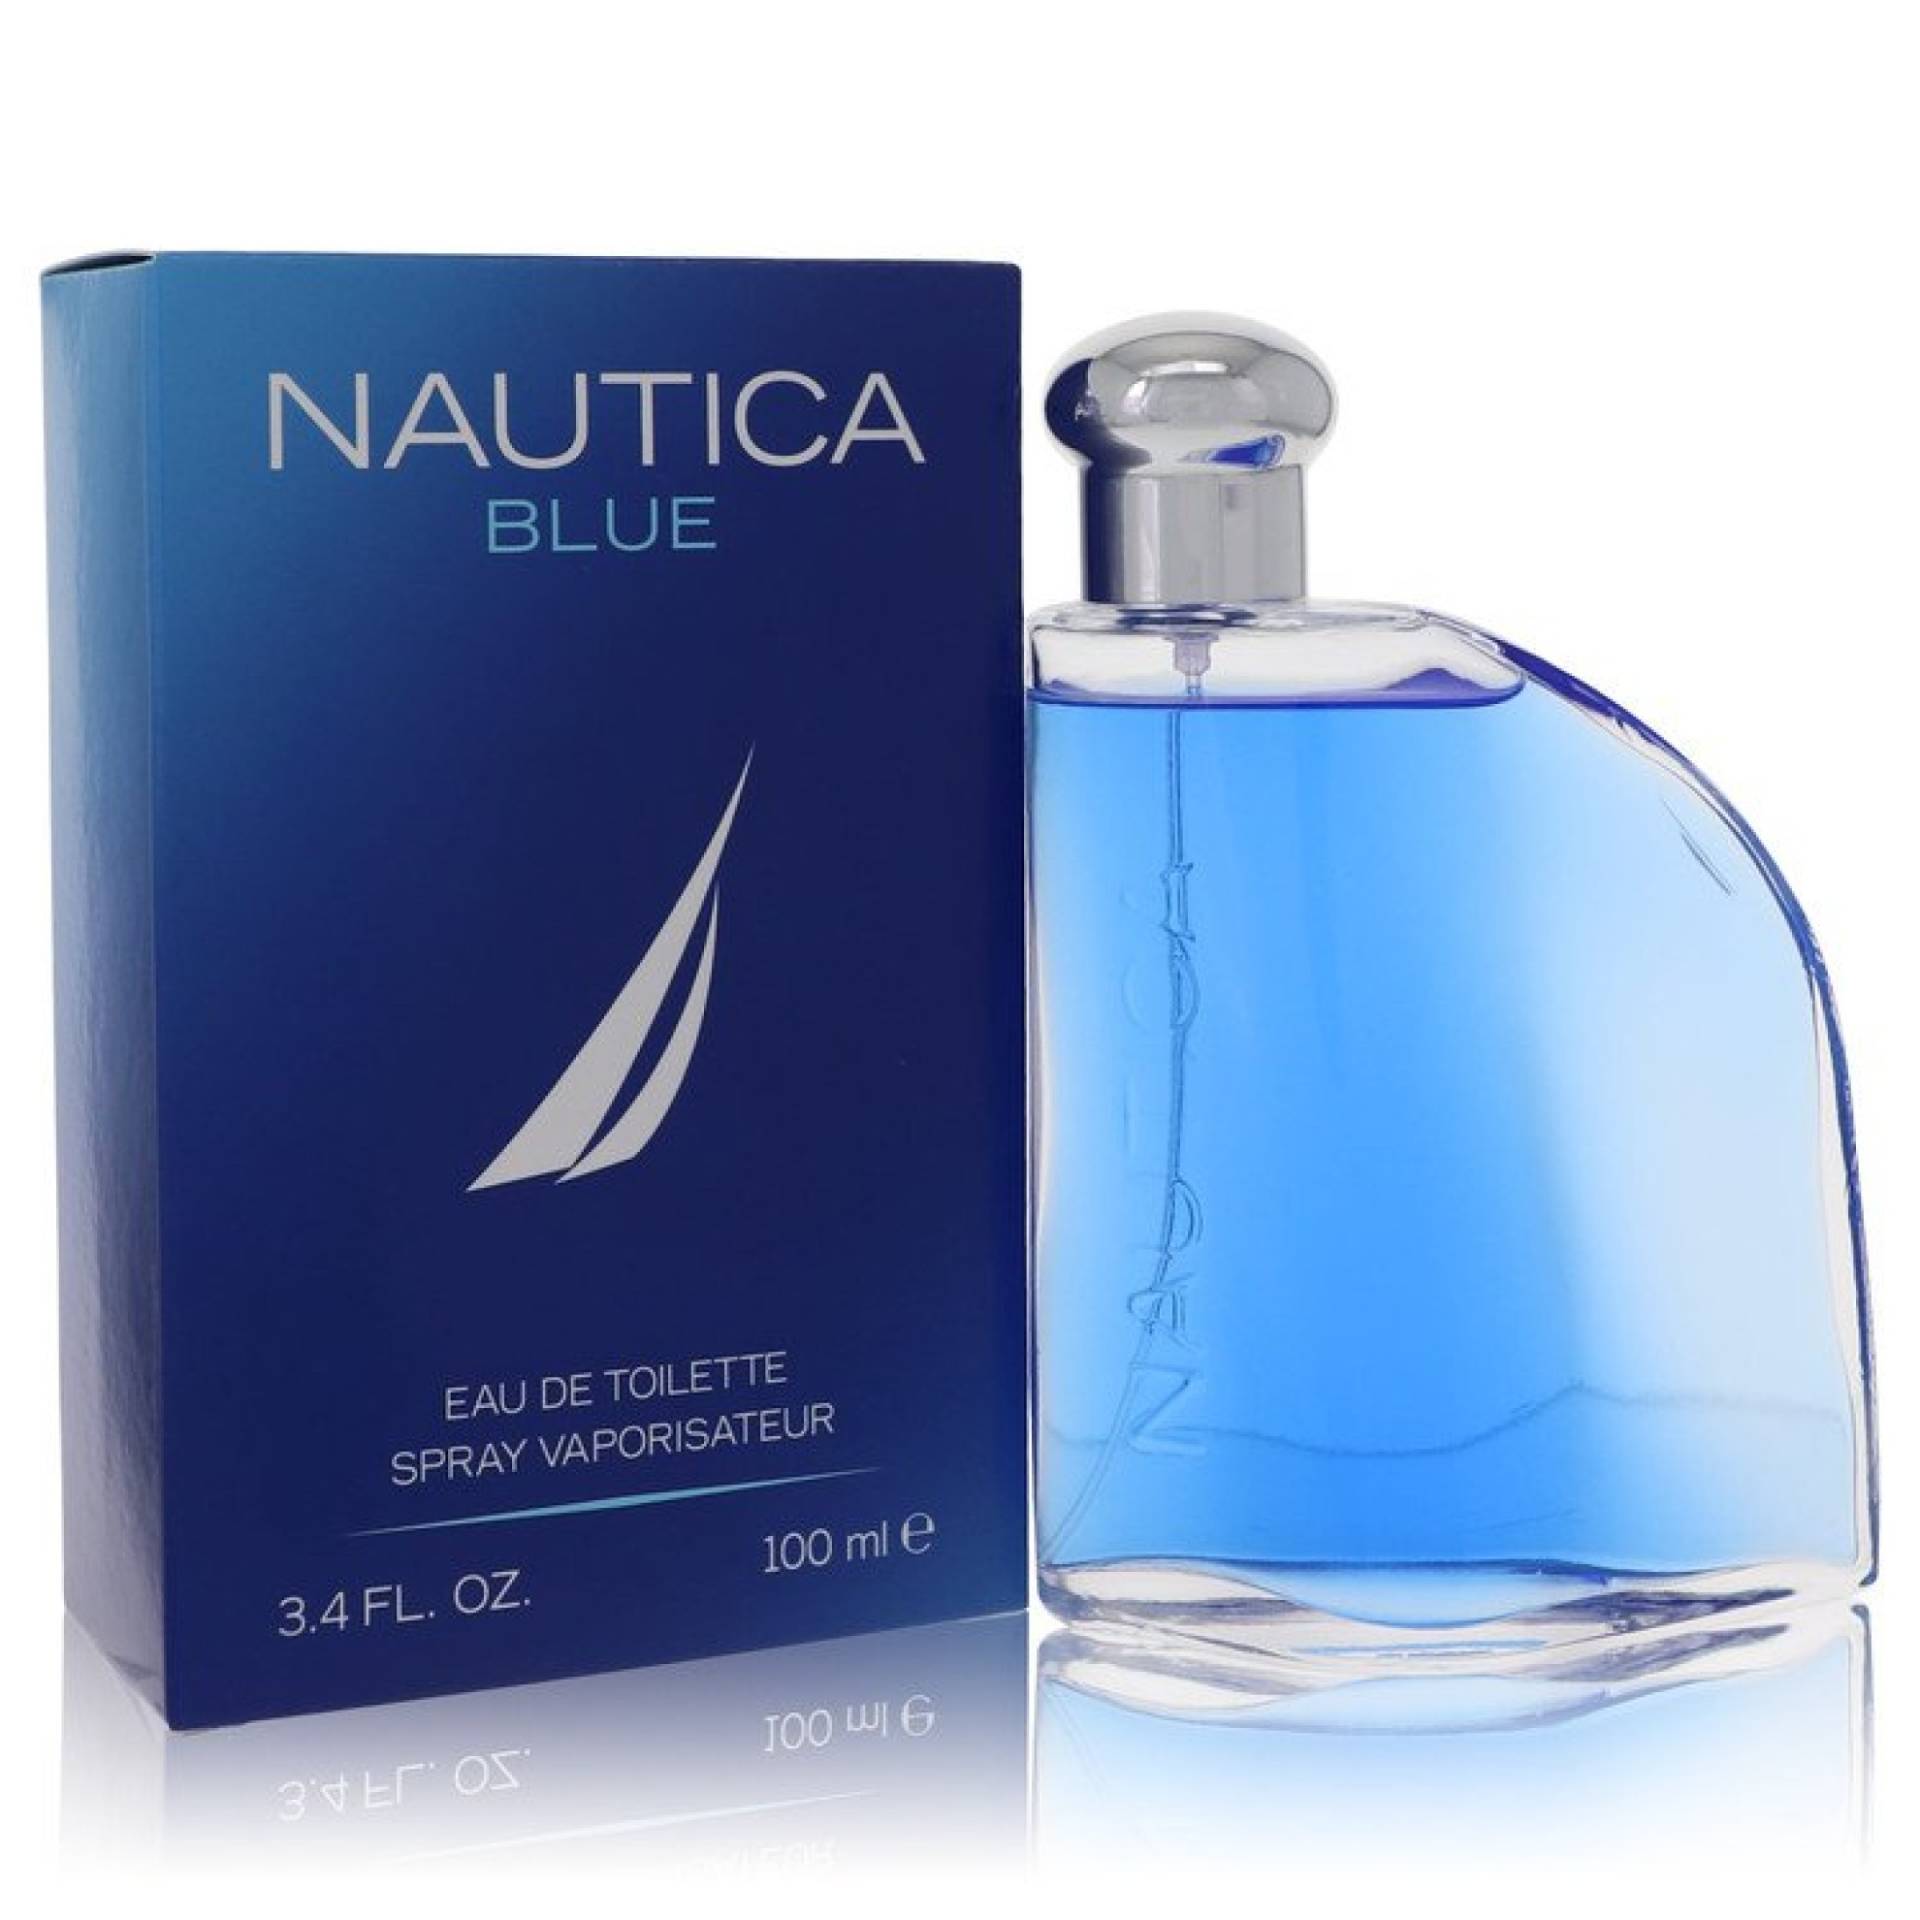 Nautica NAUTICA BLUE Eau De Toilette Spray 100 ml von Nautica